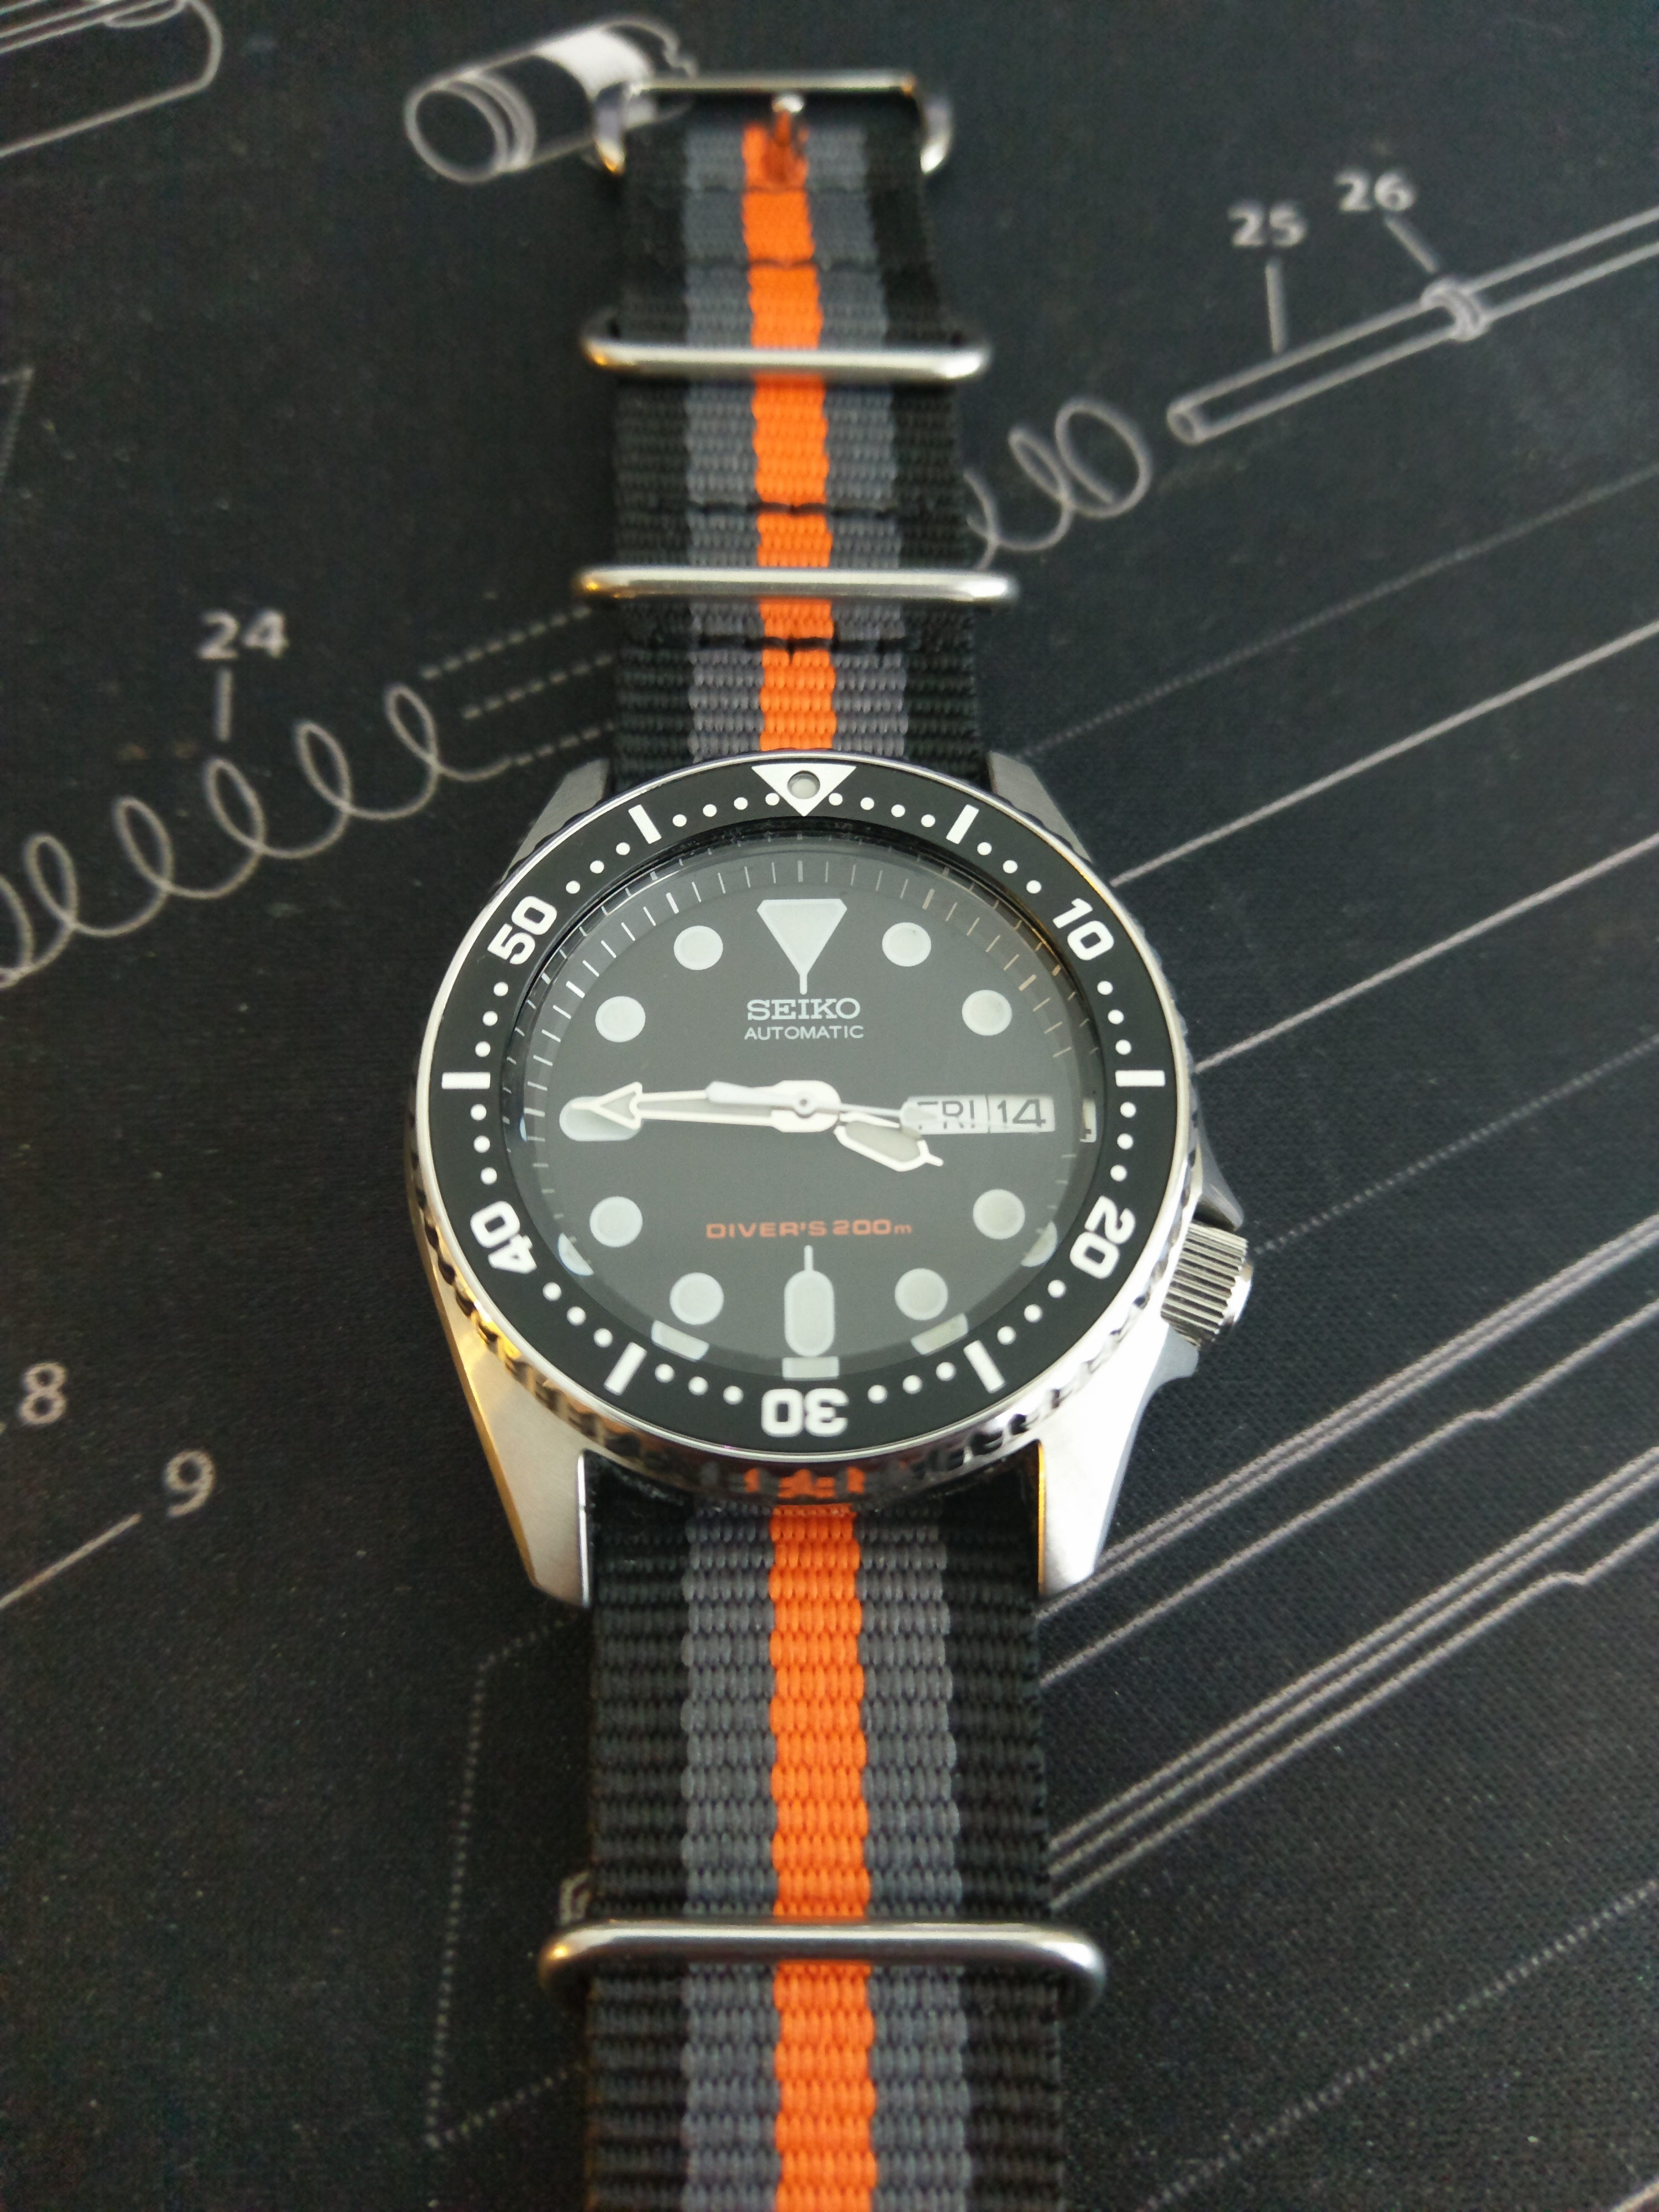 Improving The Seiko Skx013 Automatic Dive Watch By Arthur Han Medium